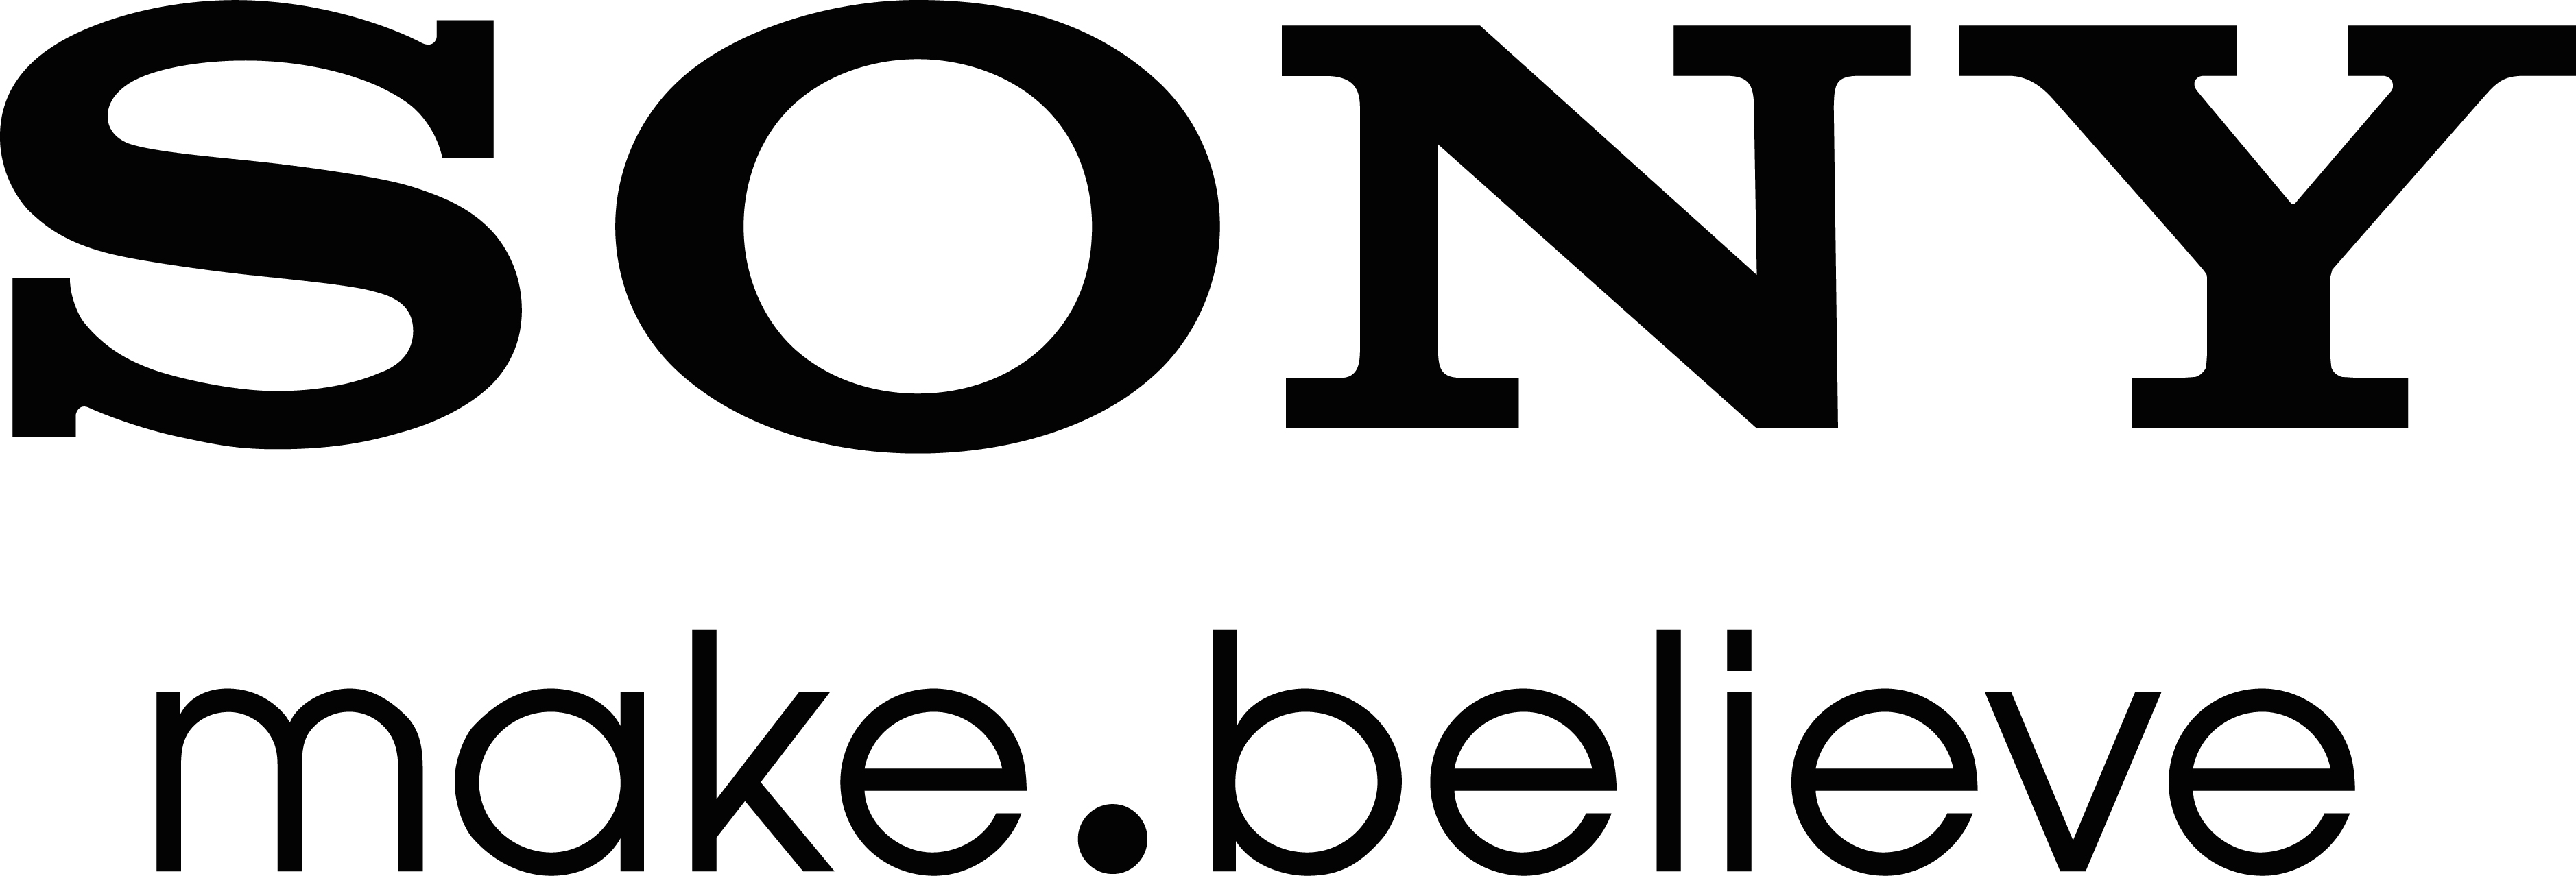 Sony_logo-2.jpg